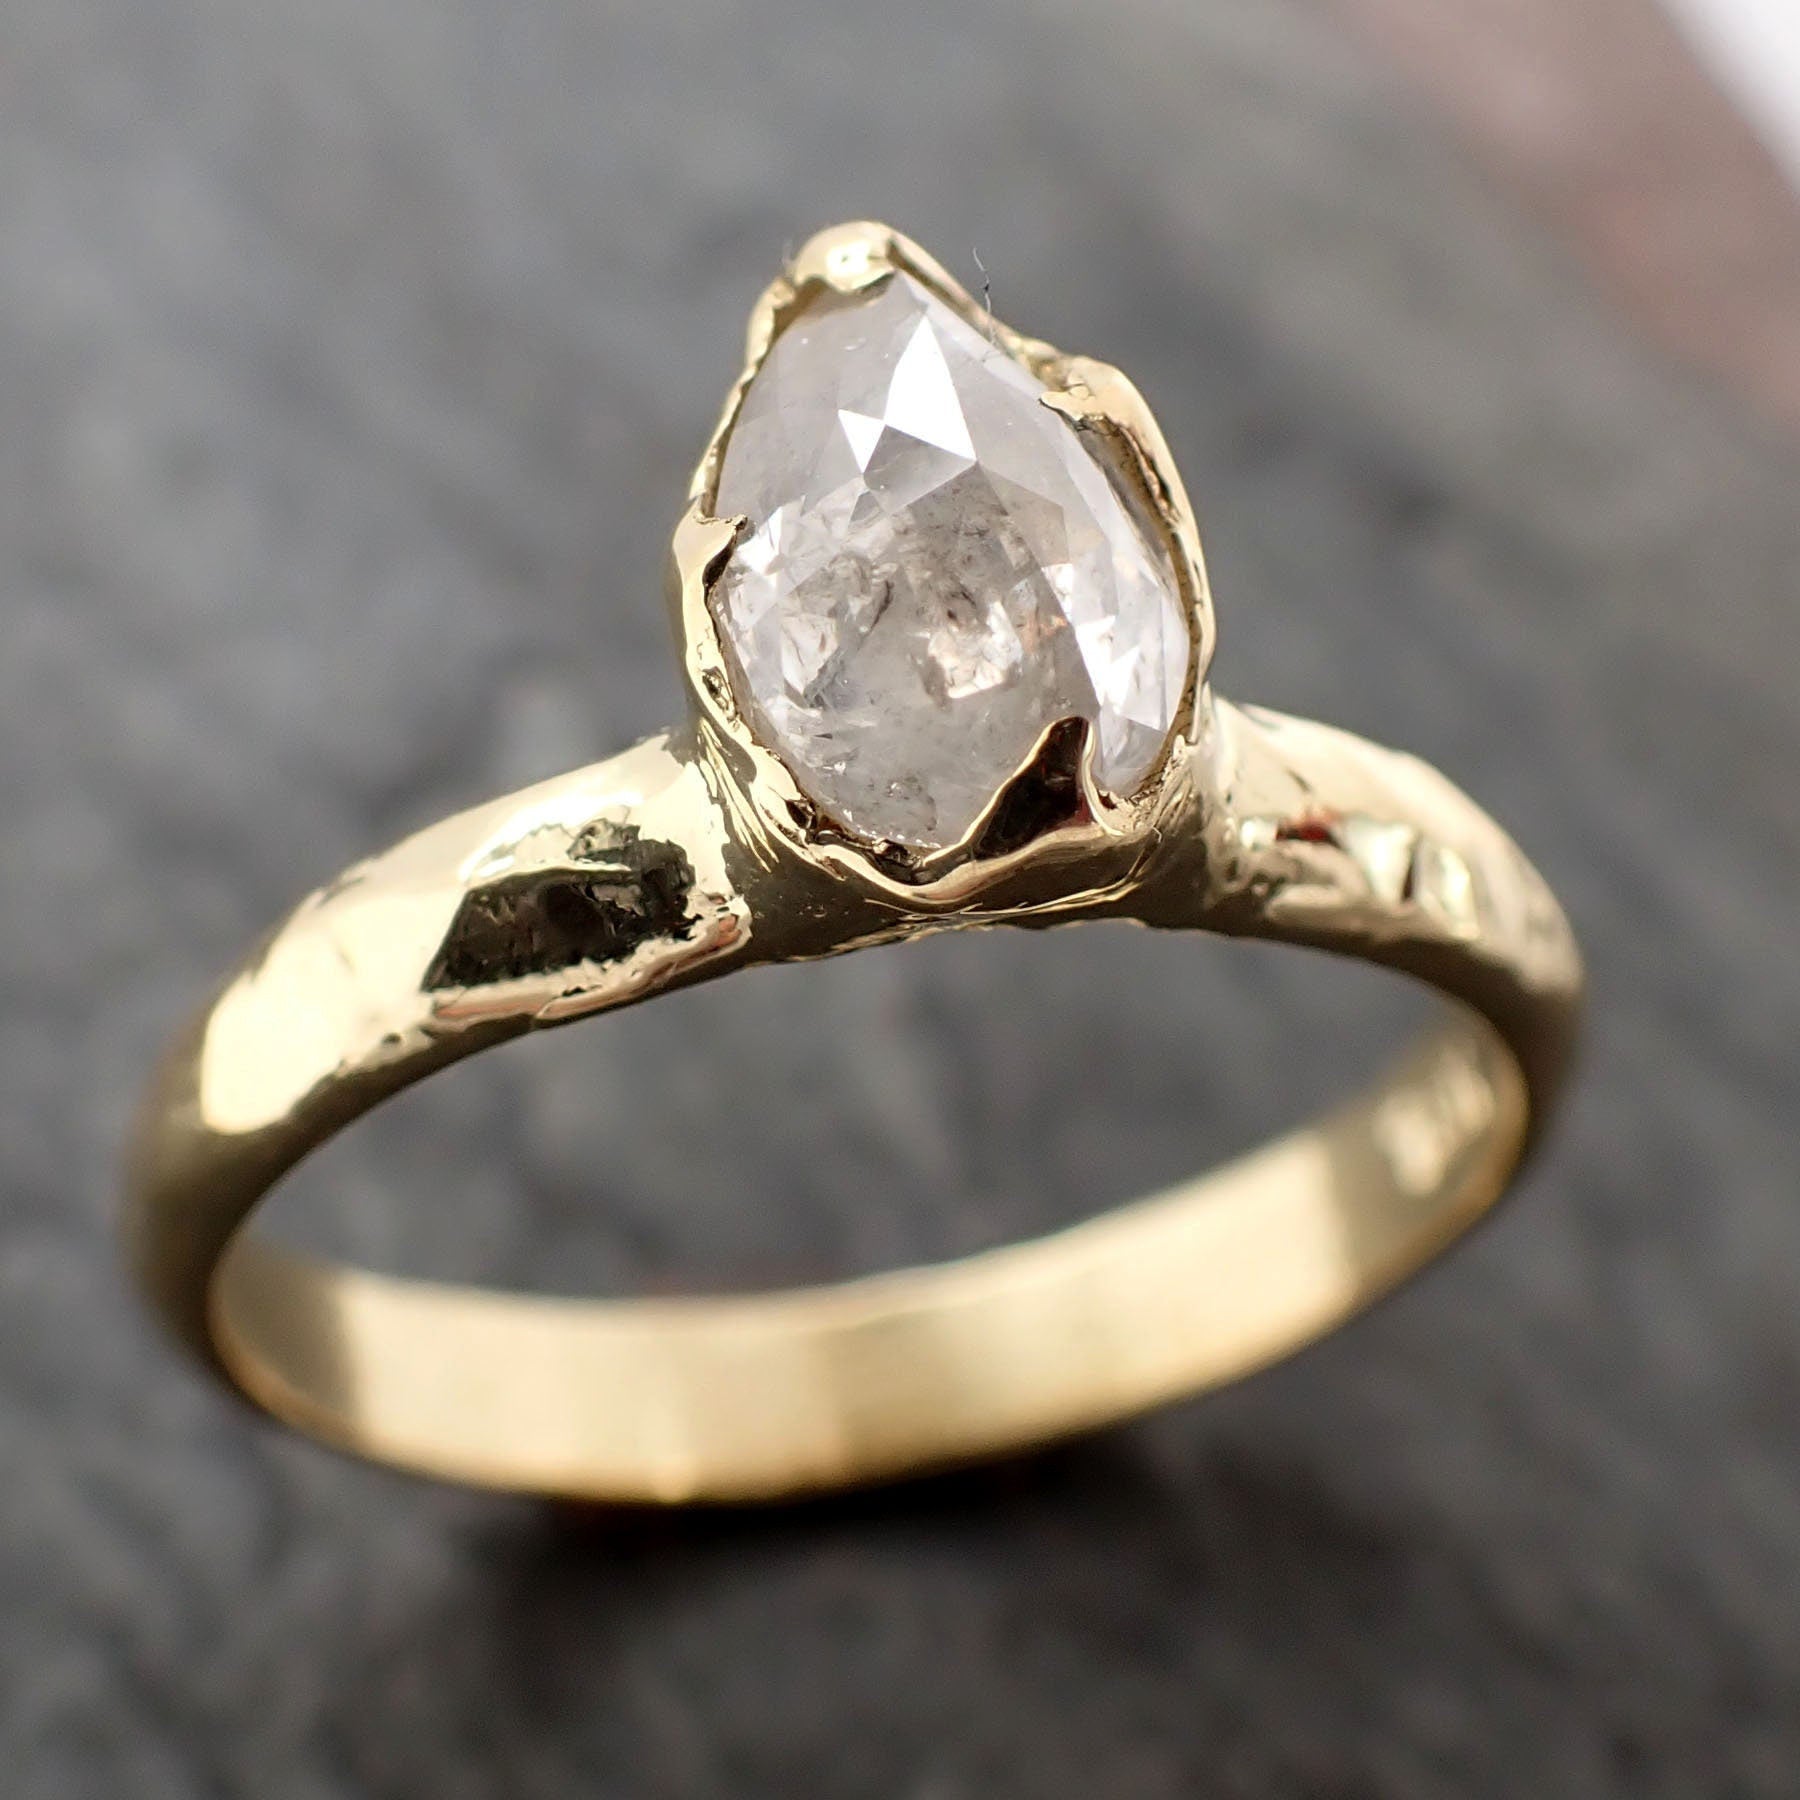 Fancy cut white Diamond Solitaire Engagement 18k yellow Gold Wedding Ring byAngeline 2917